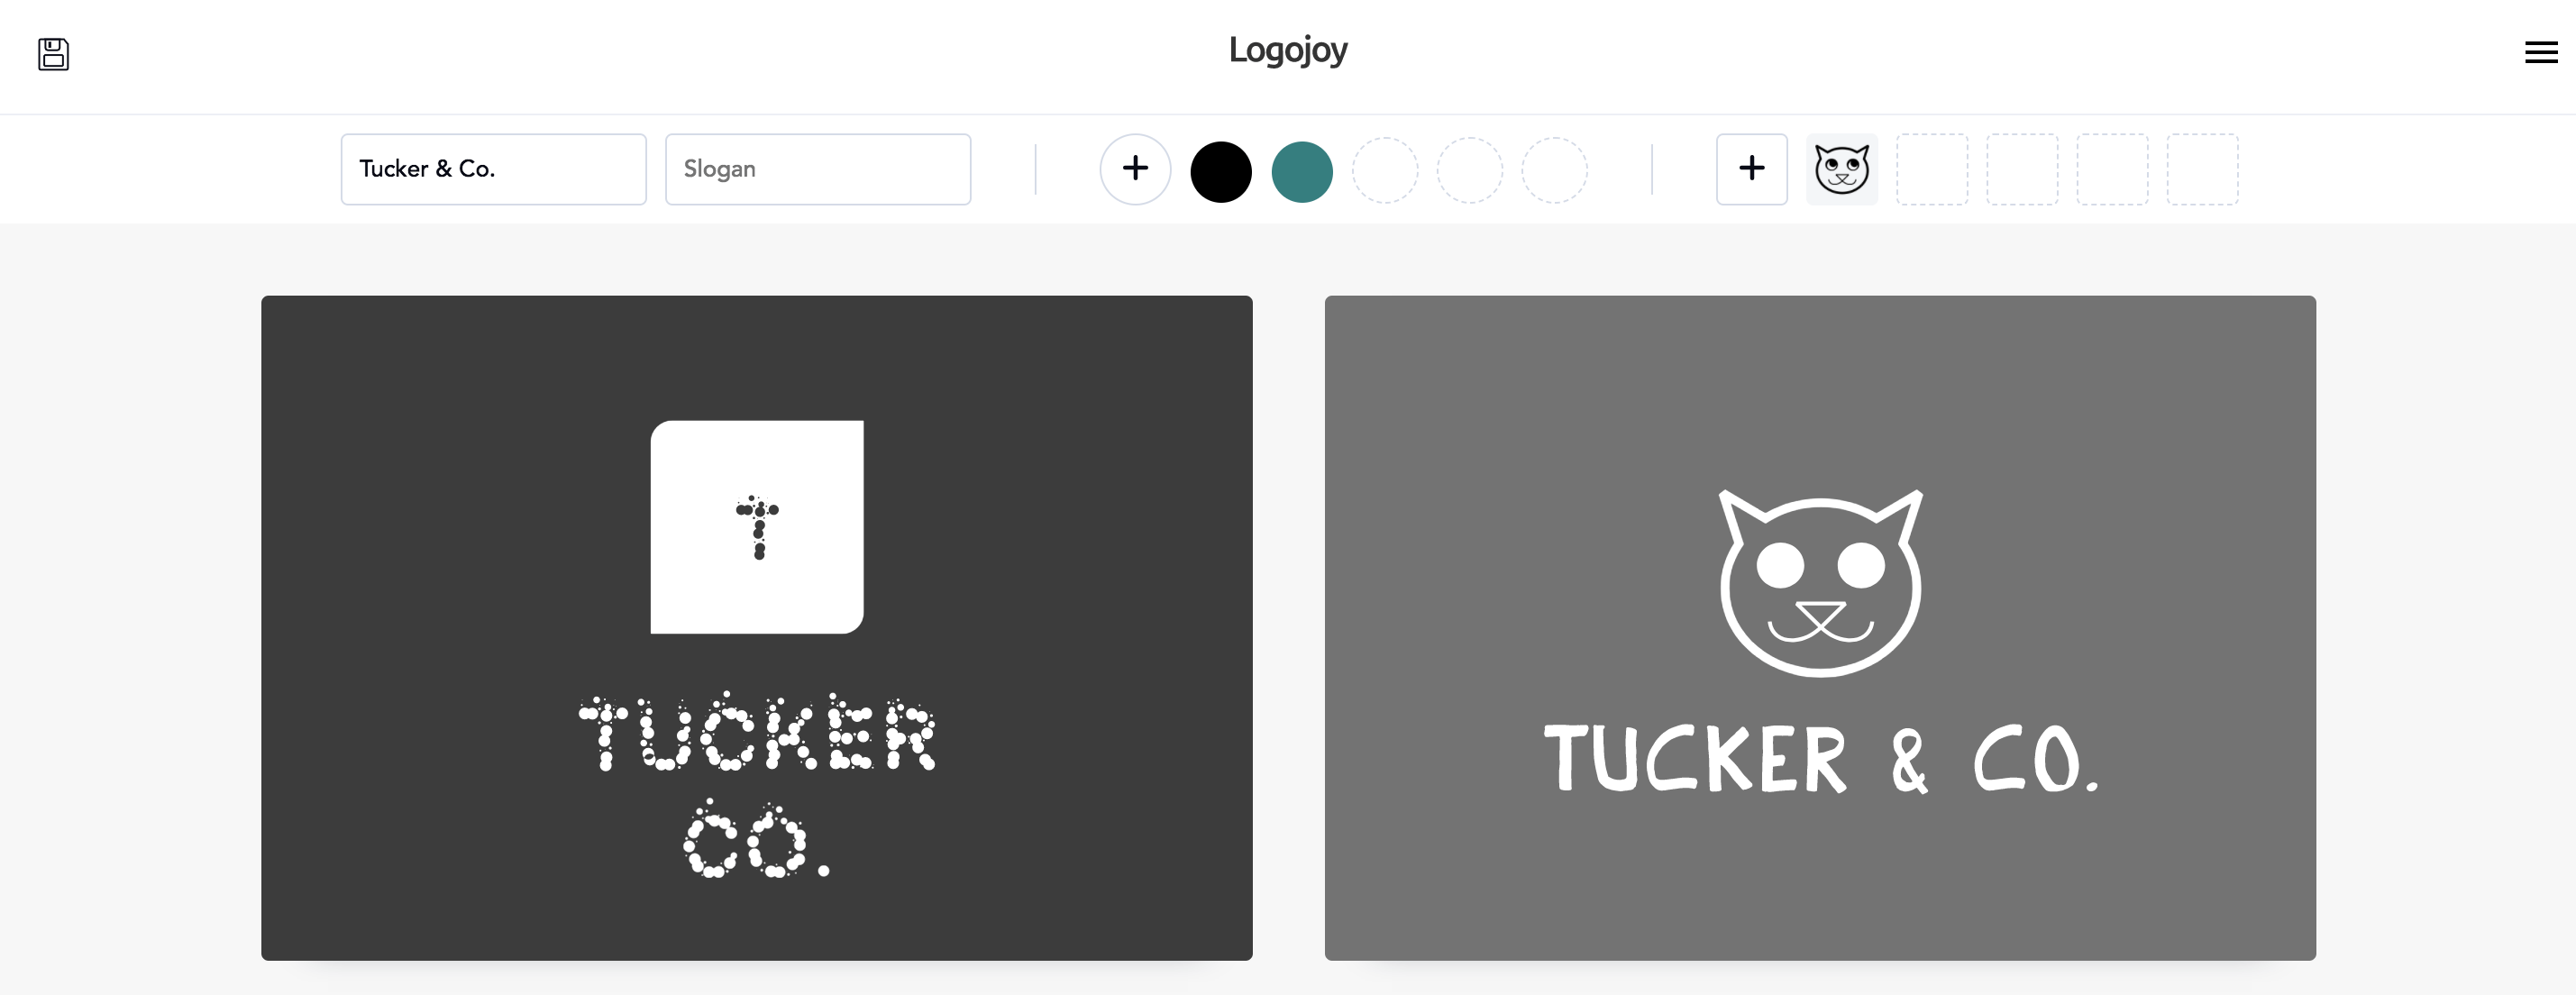 Black If Logo - 5 Online Logo Makers & Generators to Design Your Brand